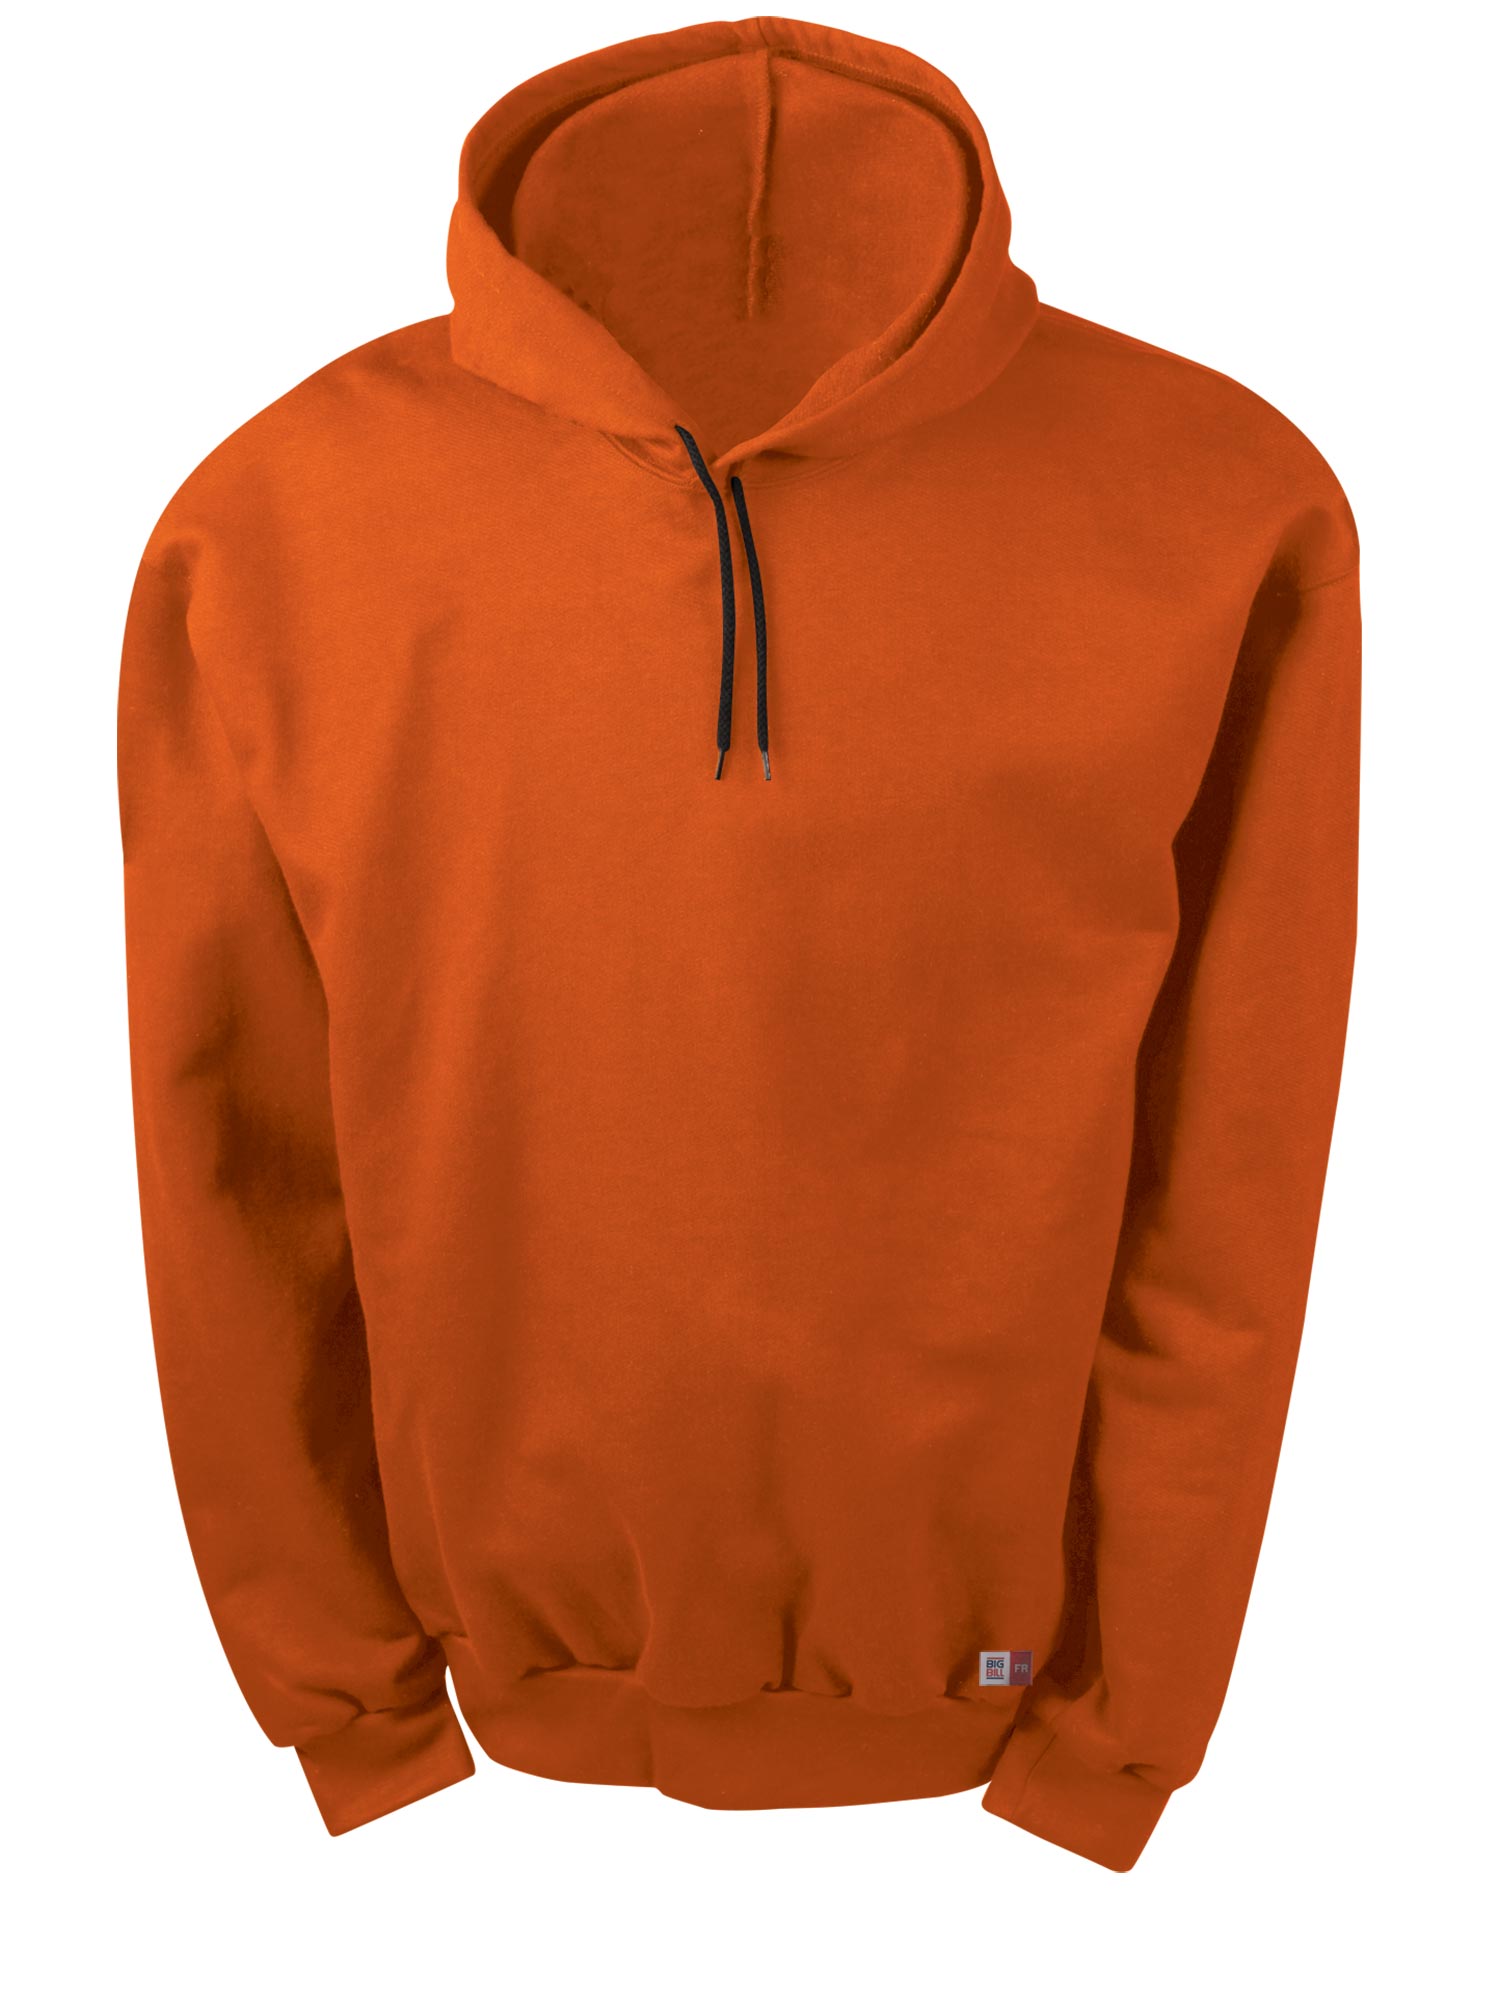 Big Bill 14 oz Flamex® FR Hooded Sweatshirt - DW16IT14